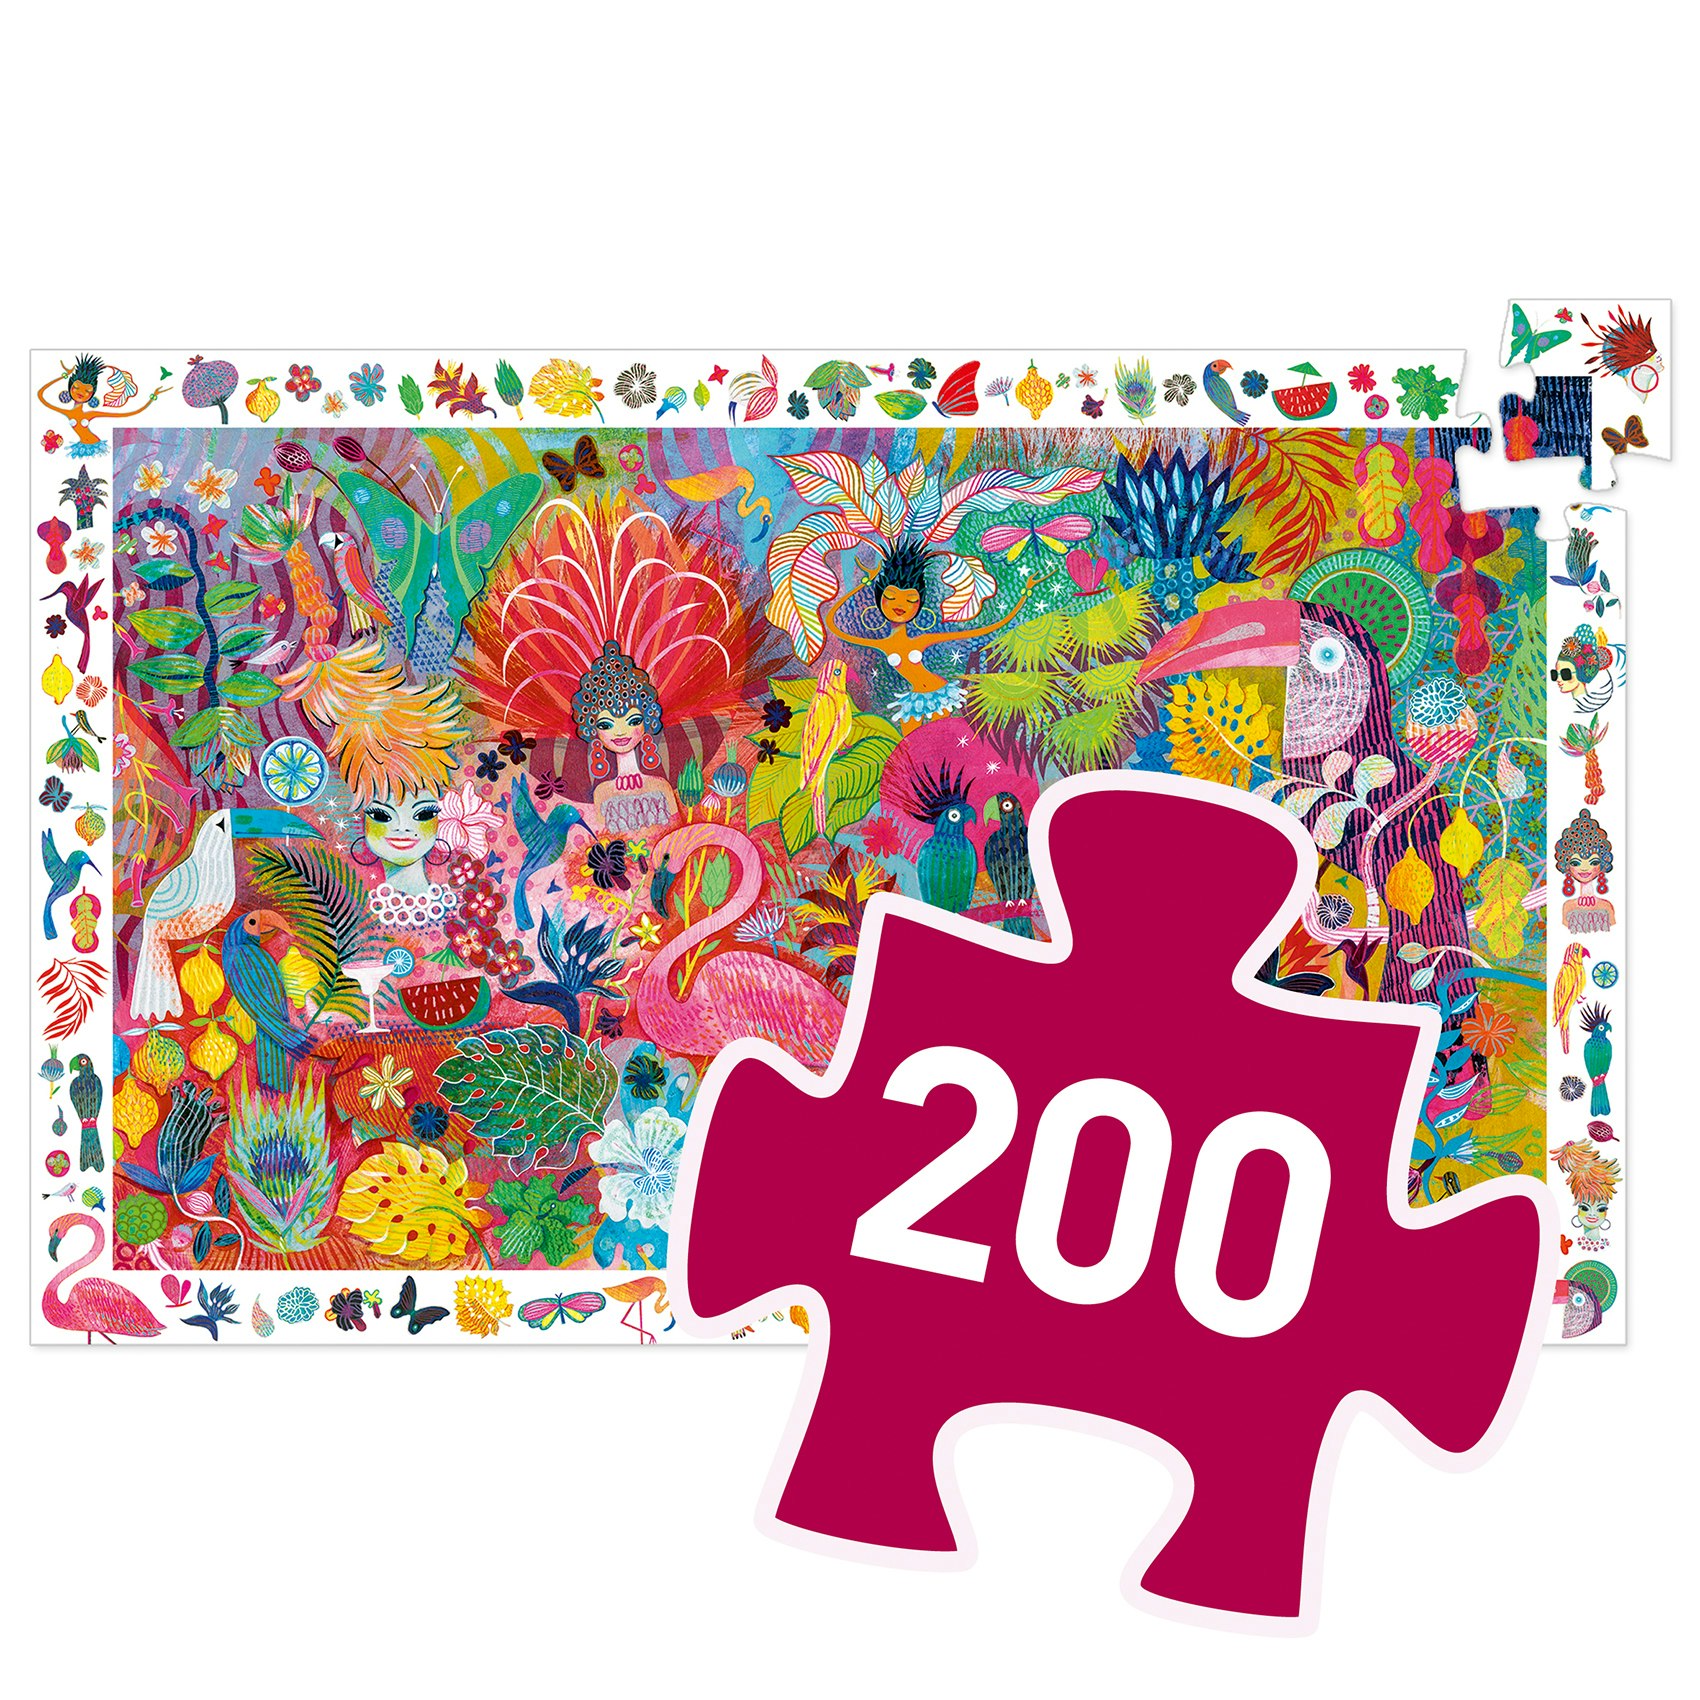 Djeco- Observation puzzle, Rio Carnaval, 200 pcs - FSC MIX